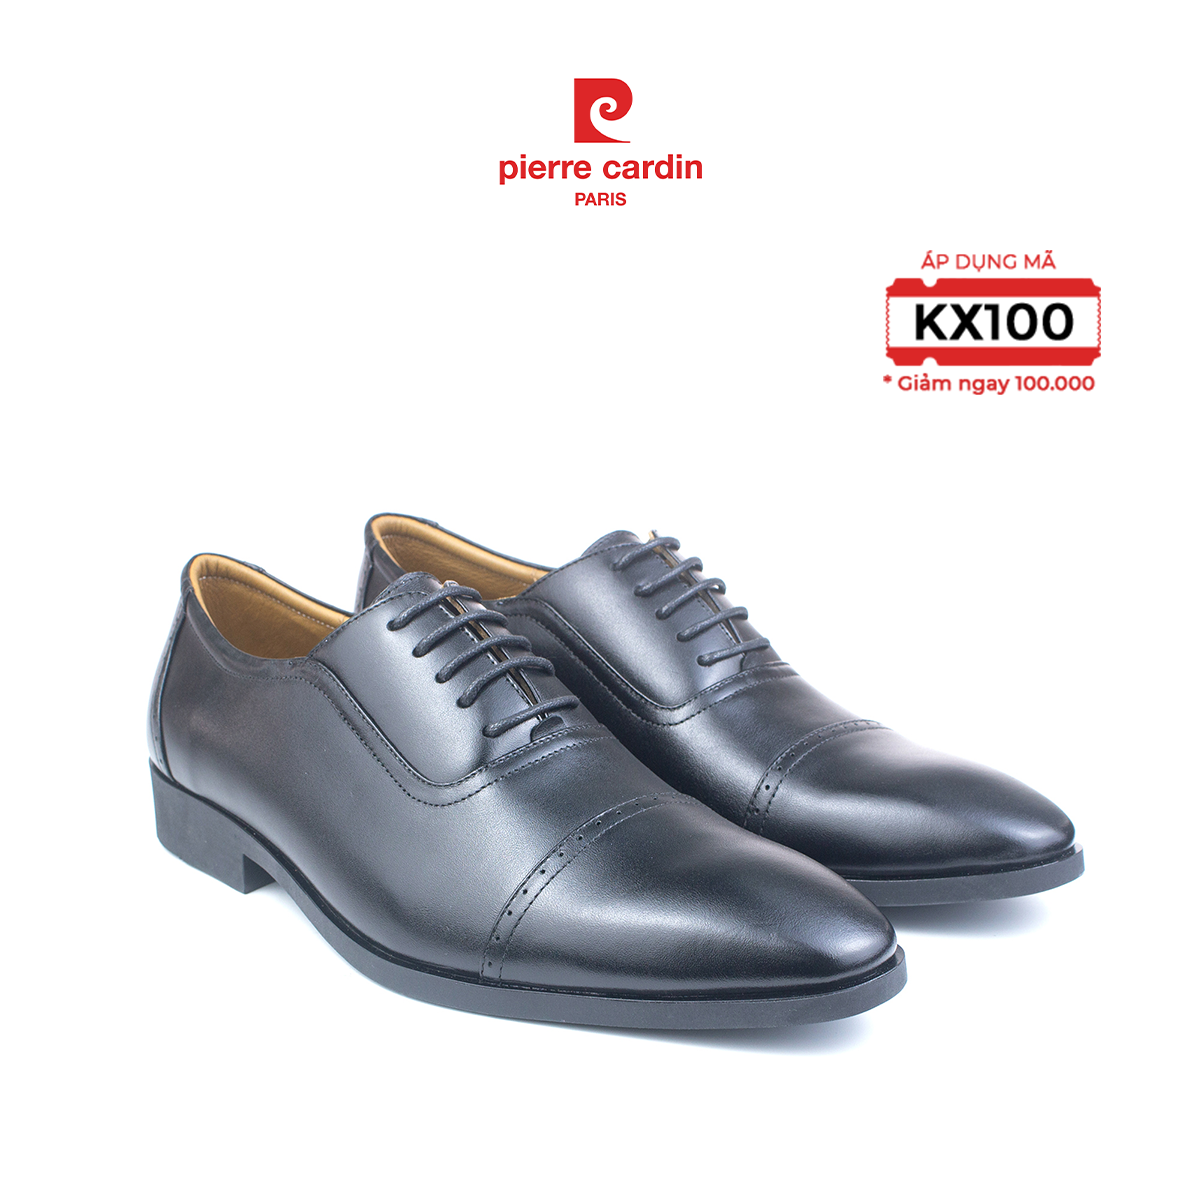 Pierre Cadin Paris Vietnam: Oxford/ Loafer Shoes - PCMFWLE 715